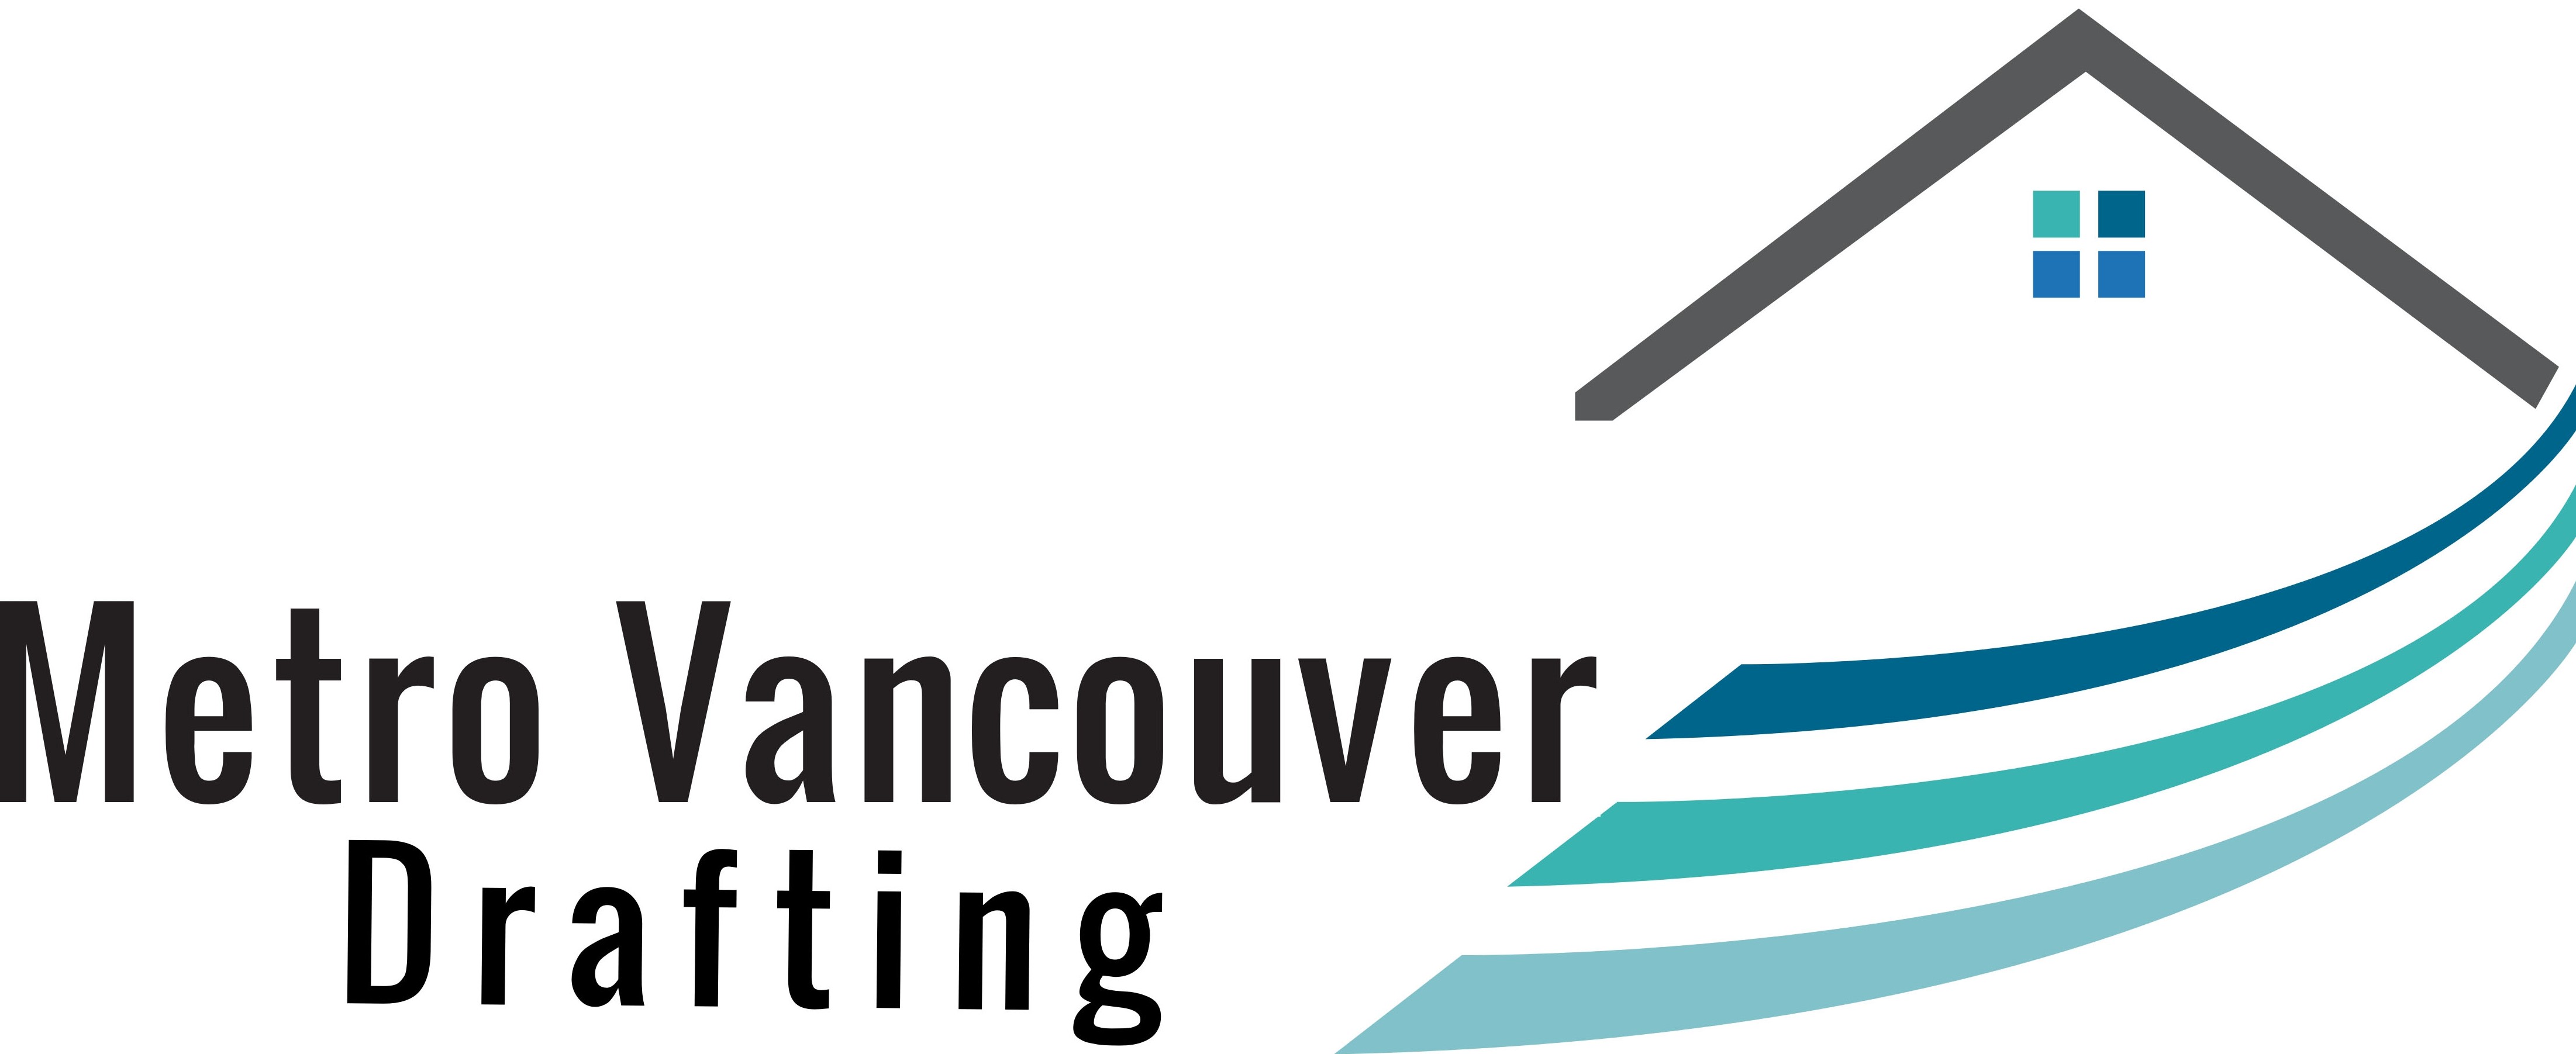 Metro Vancouver Drafting S